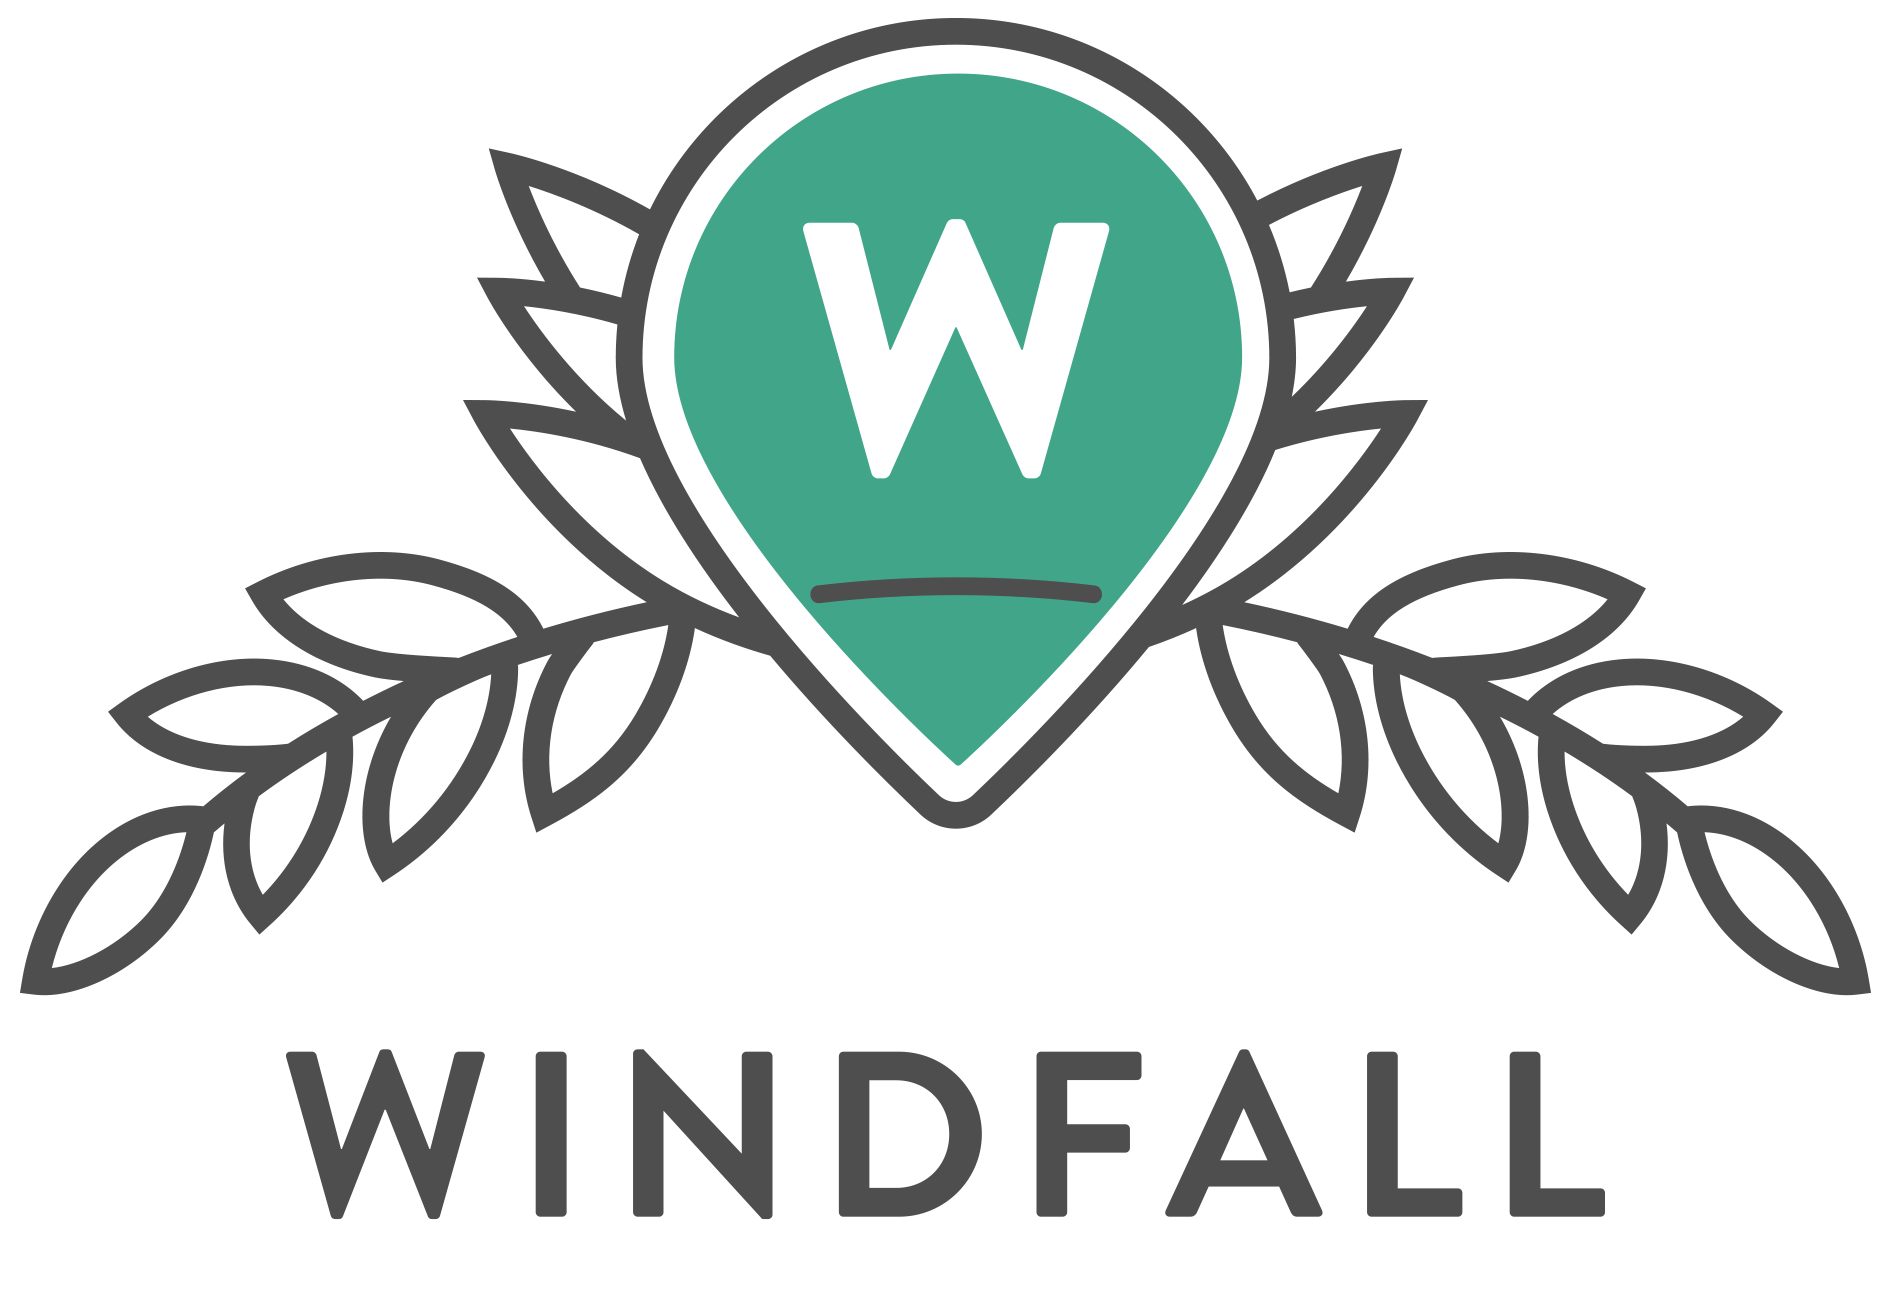 Windfall logo